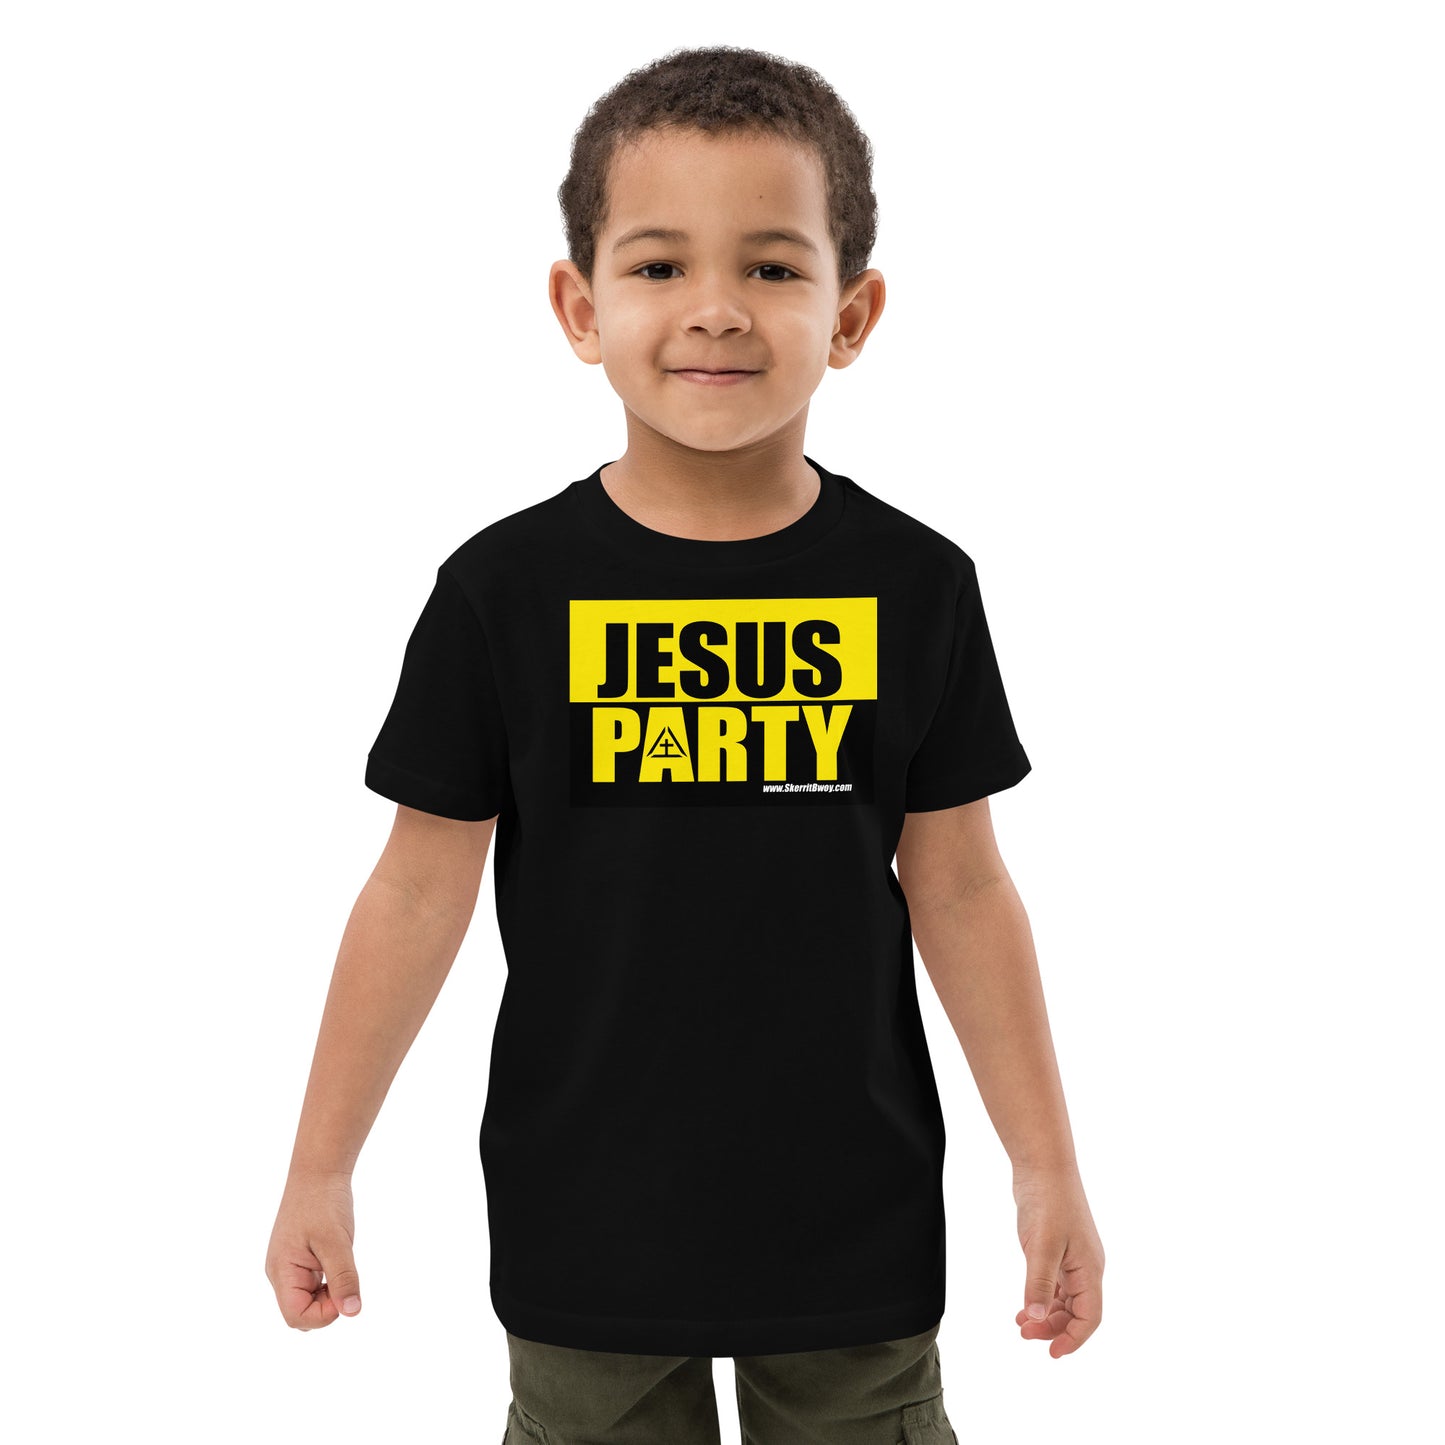 Jesus Party - Youth - Organic cotton kids t-shirt